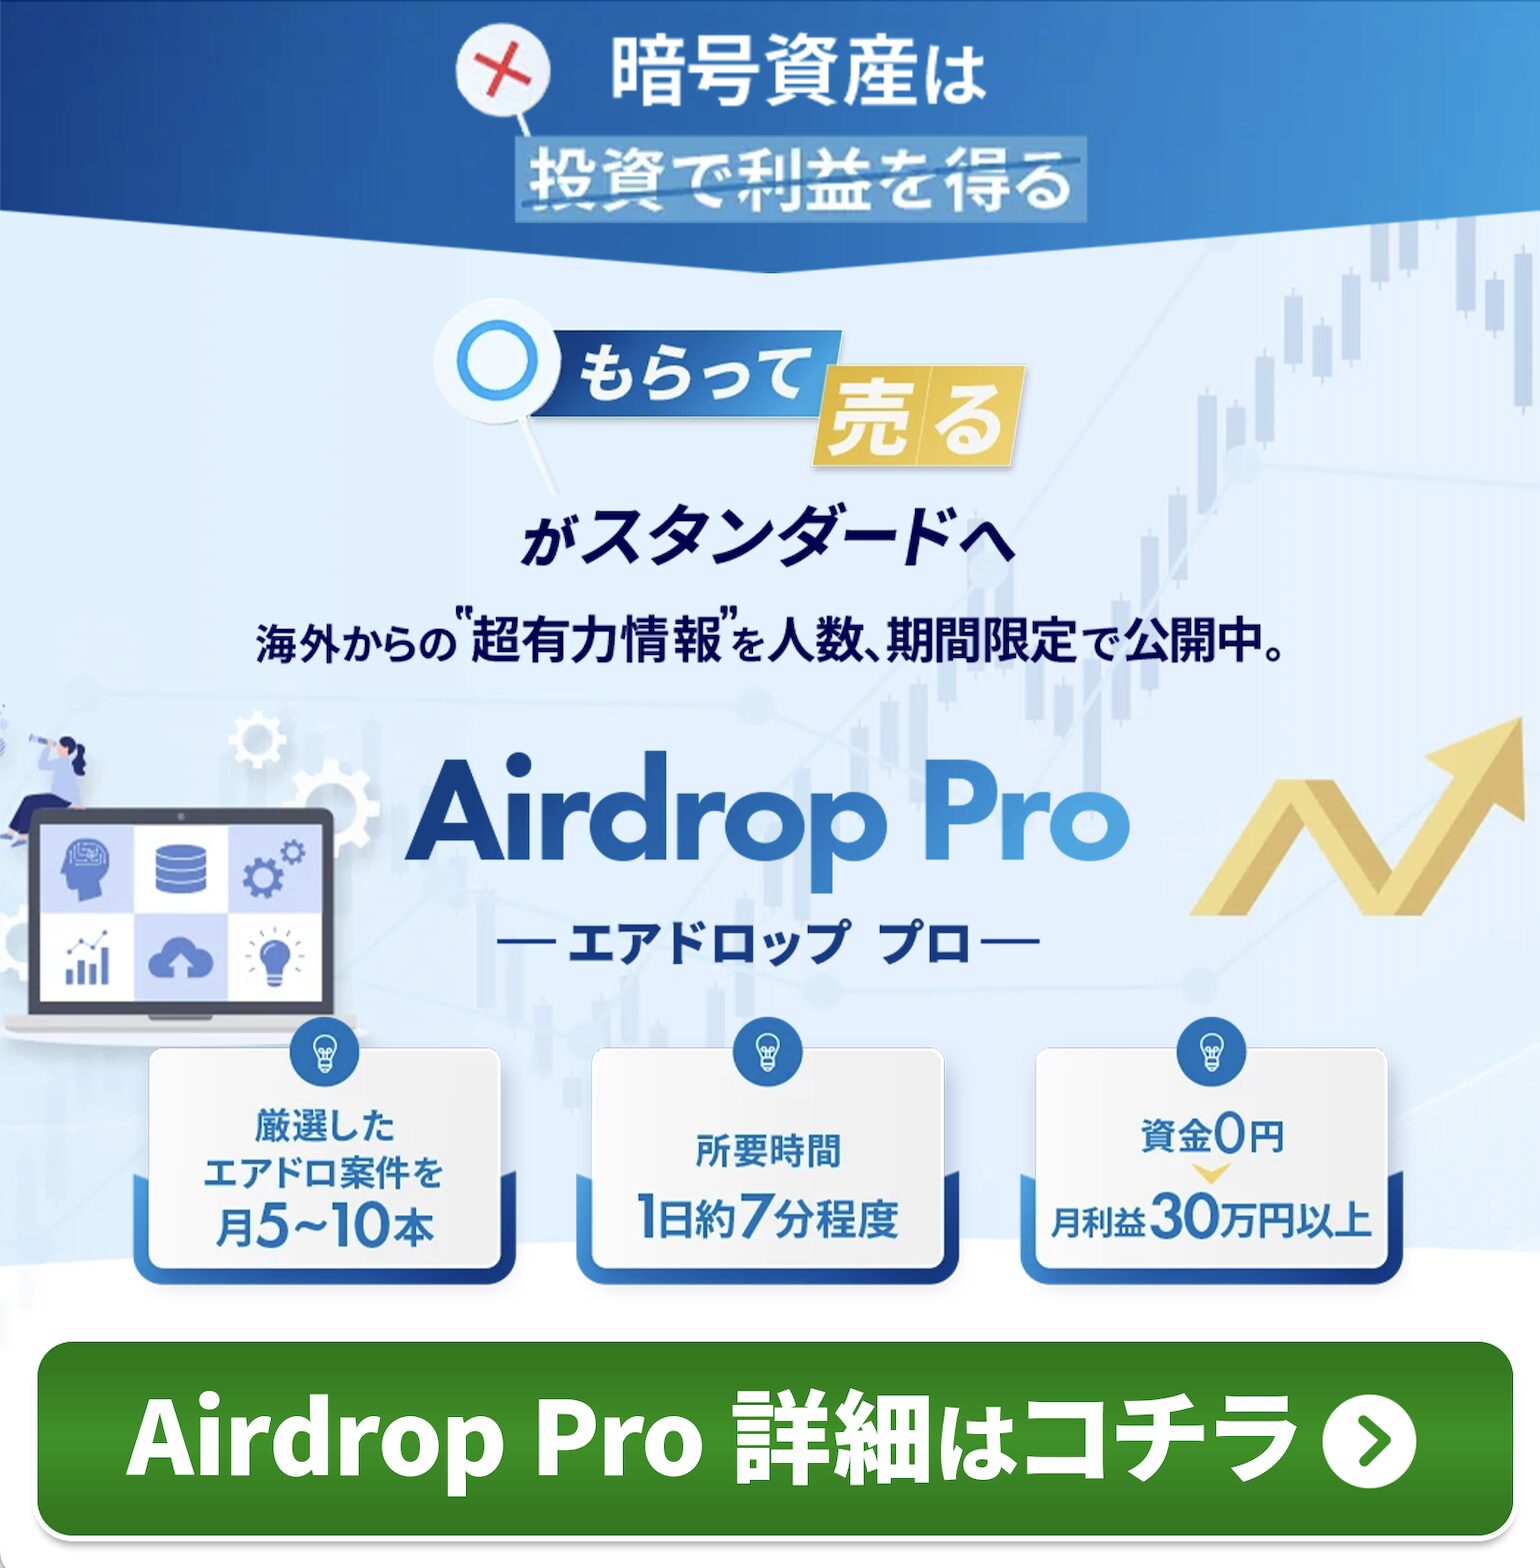 Airdrop Pro